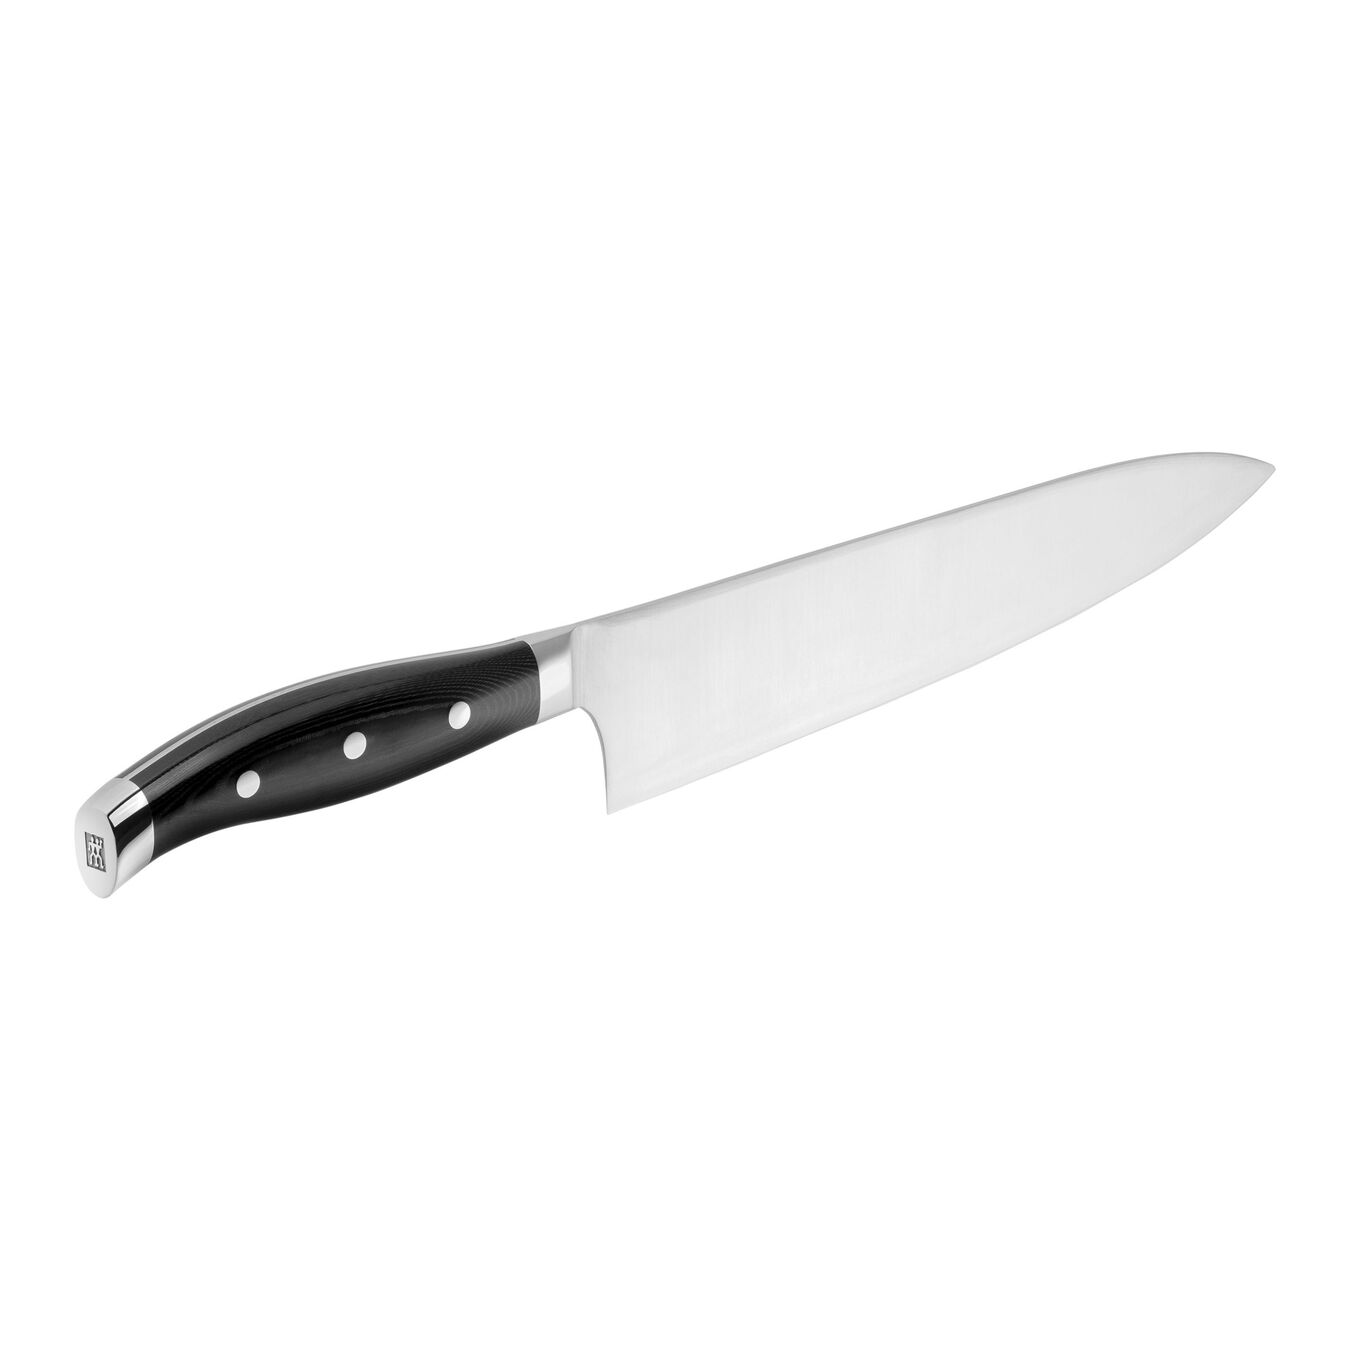 Couteau santoku 18 cm, Micarta,,large 1